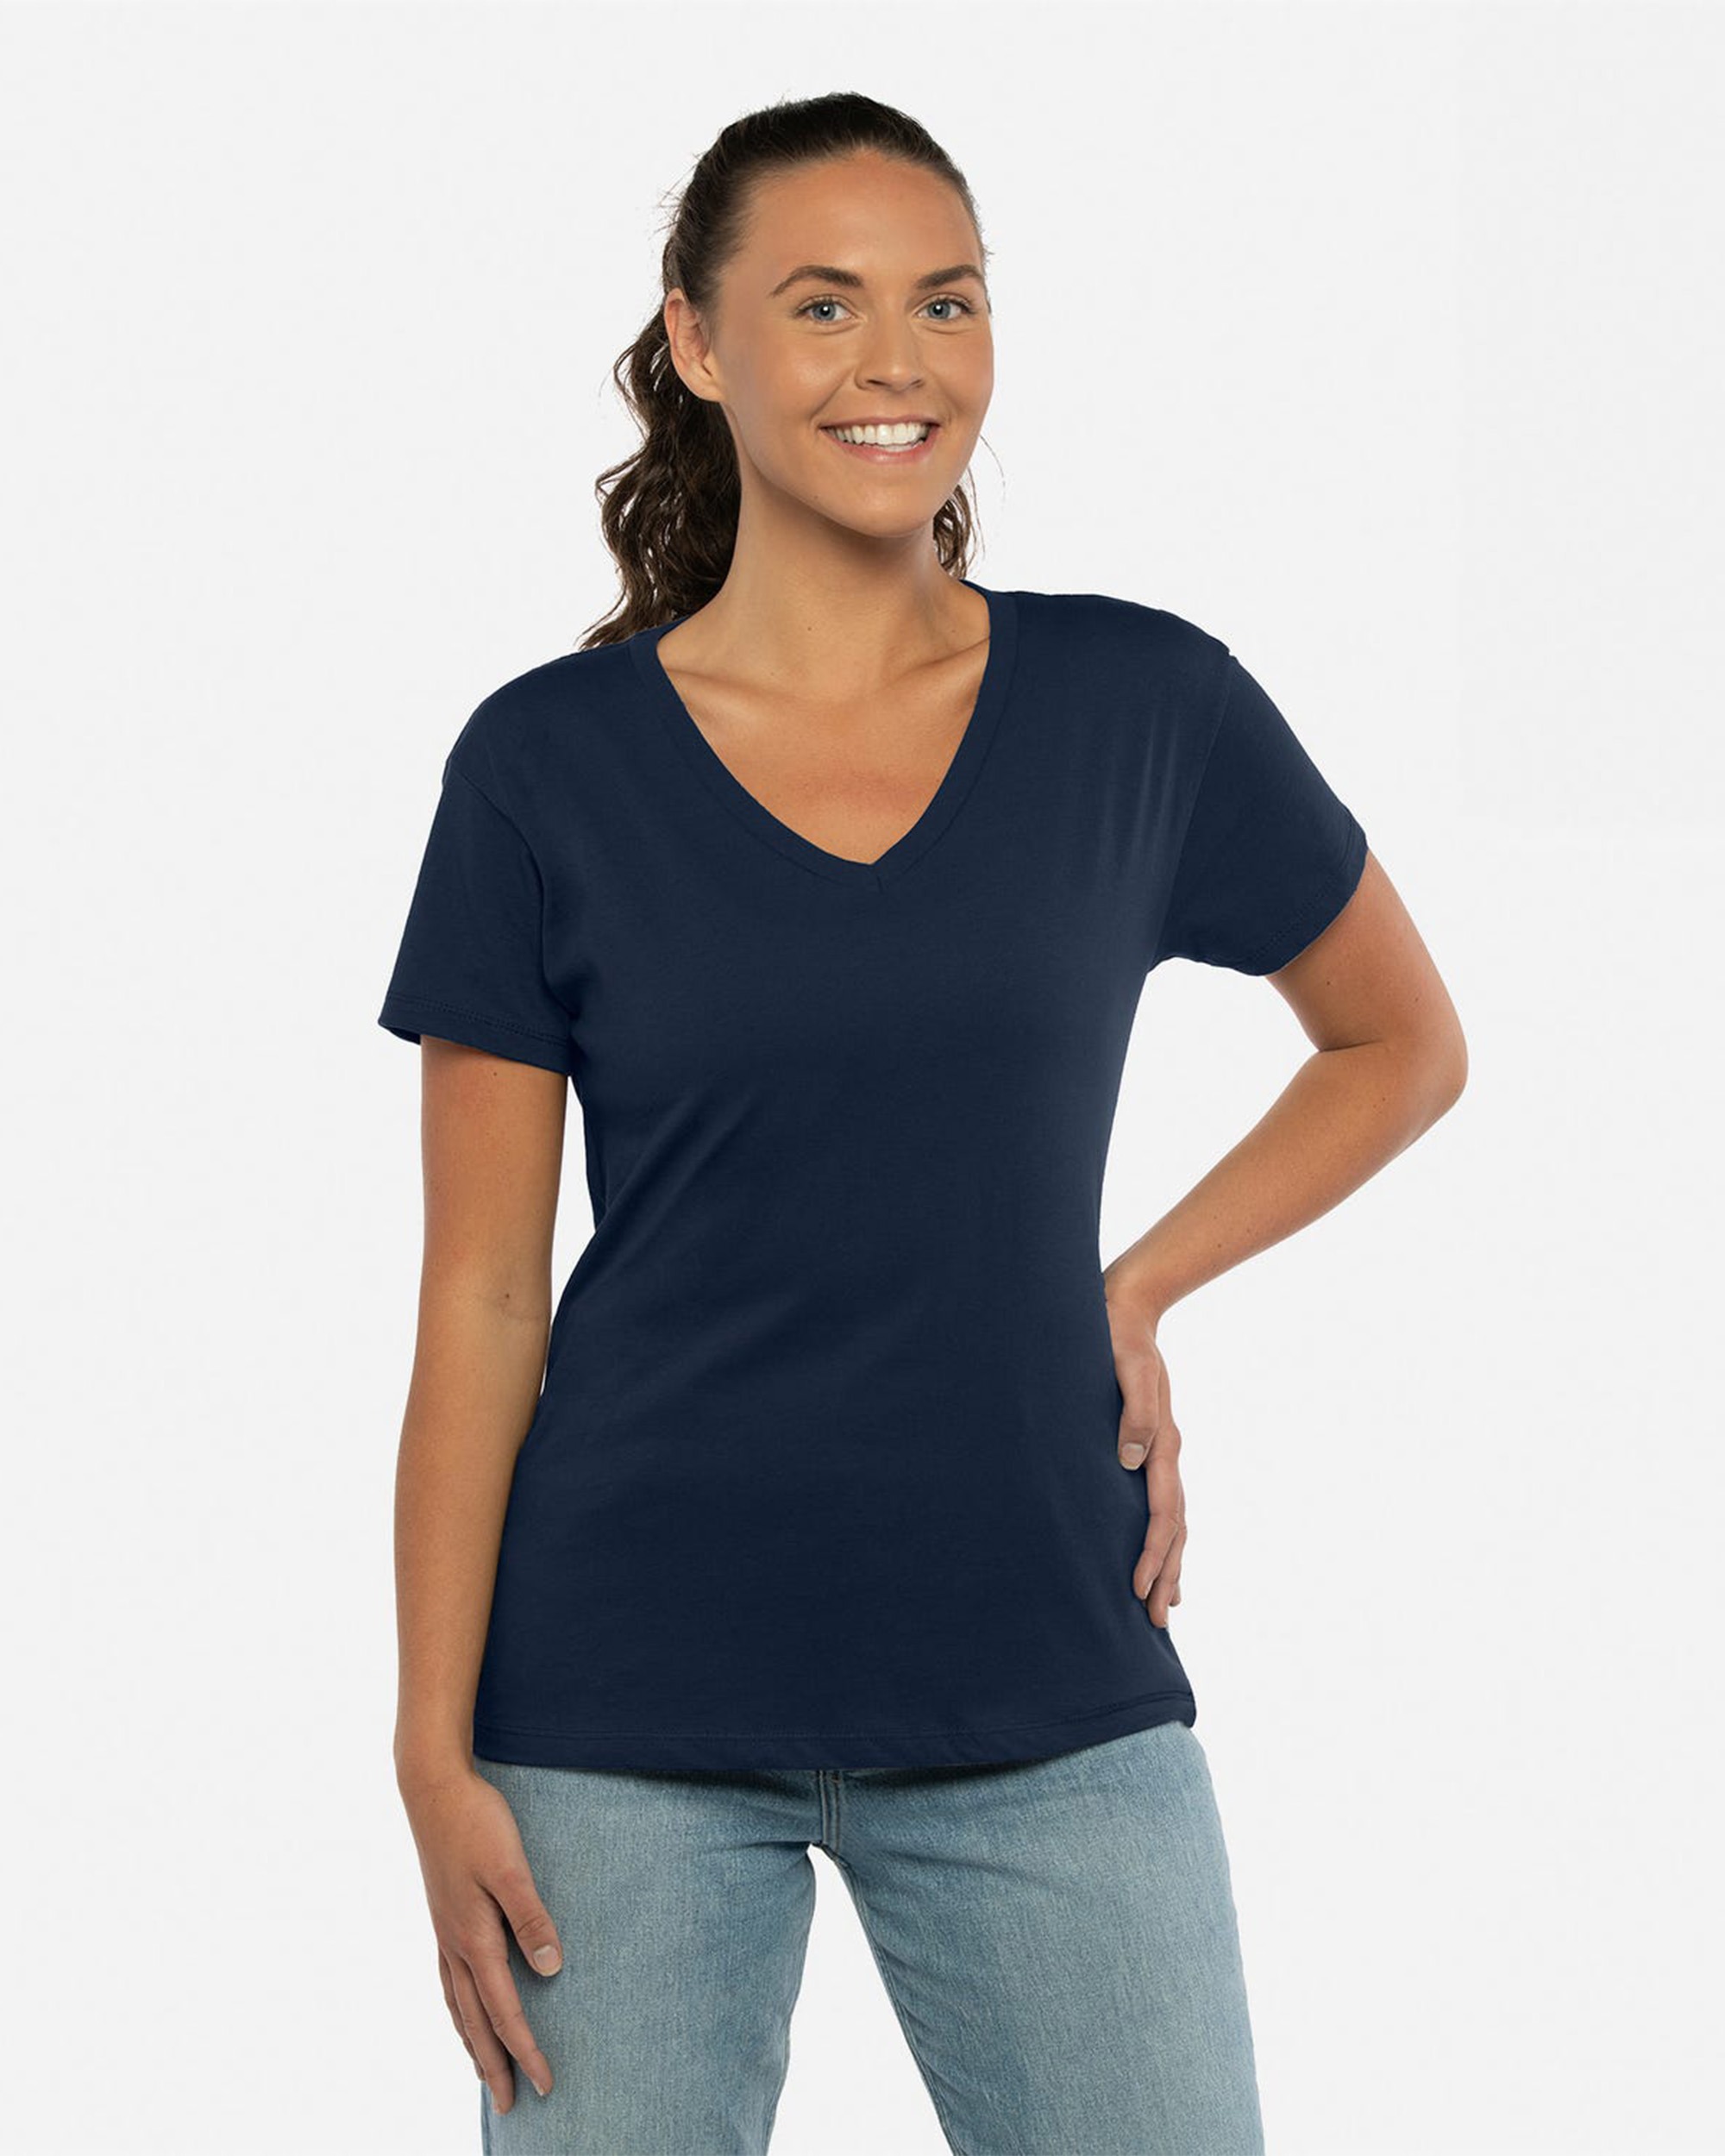 Next Level Apparel® 3940 Women's Cotton V-Neck T-Shirt